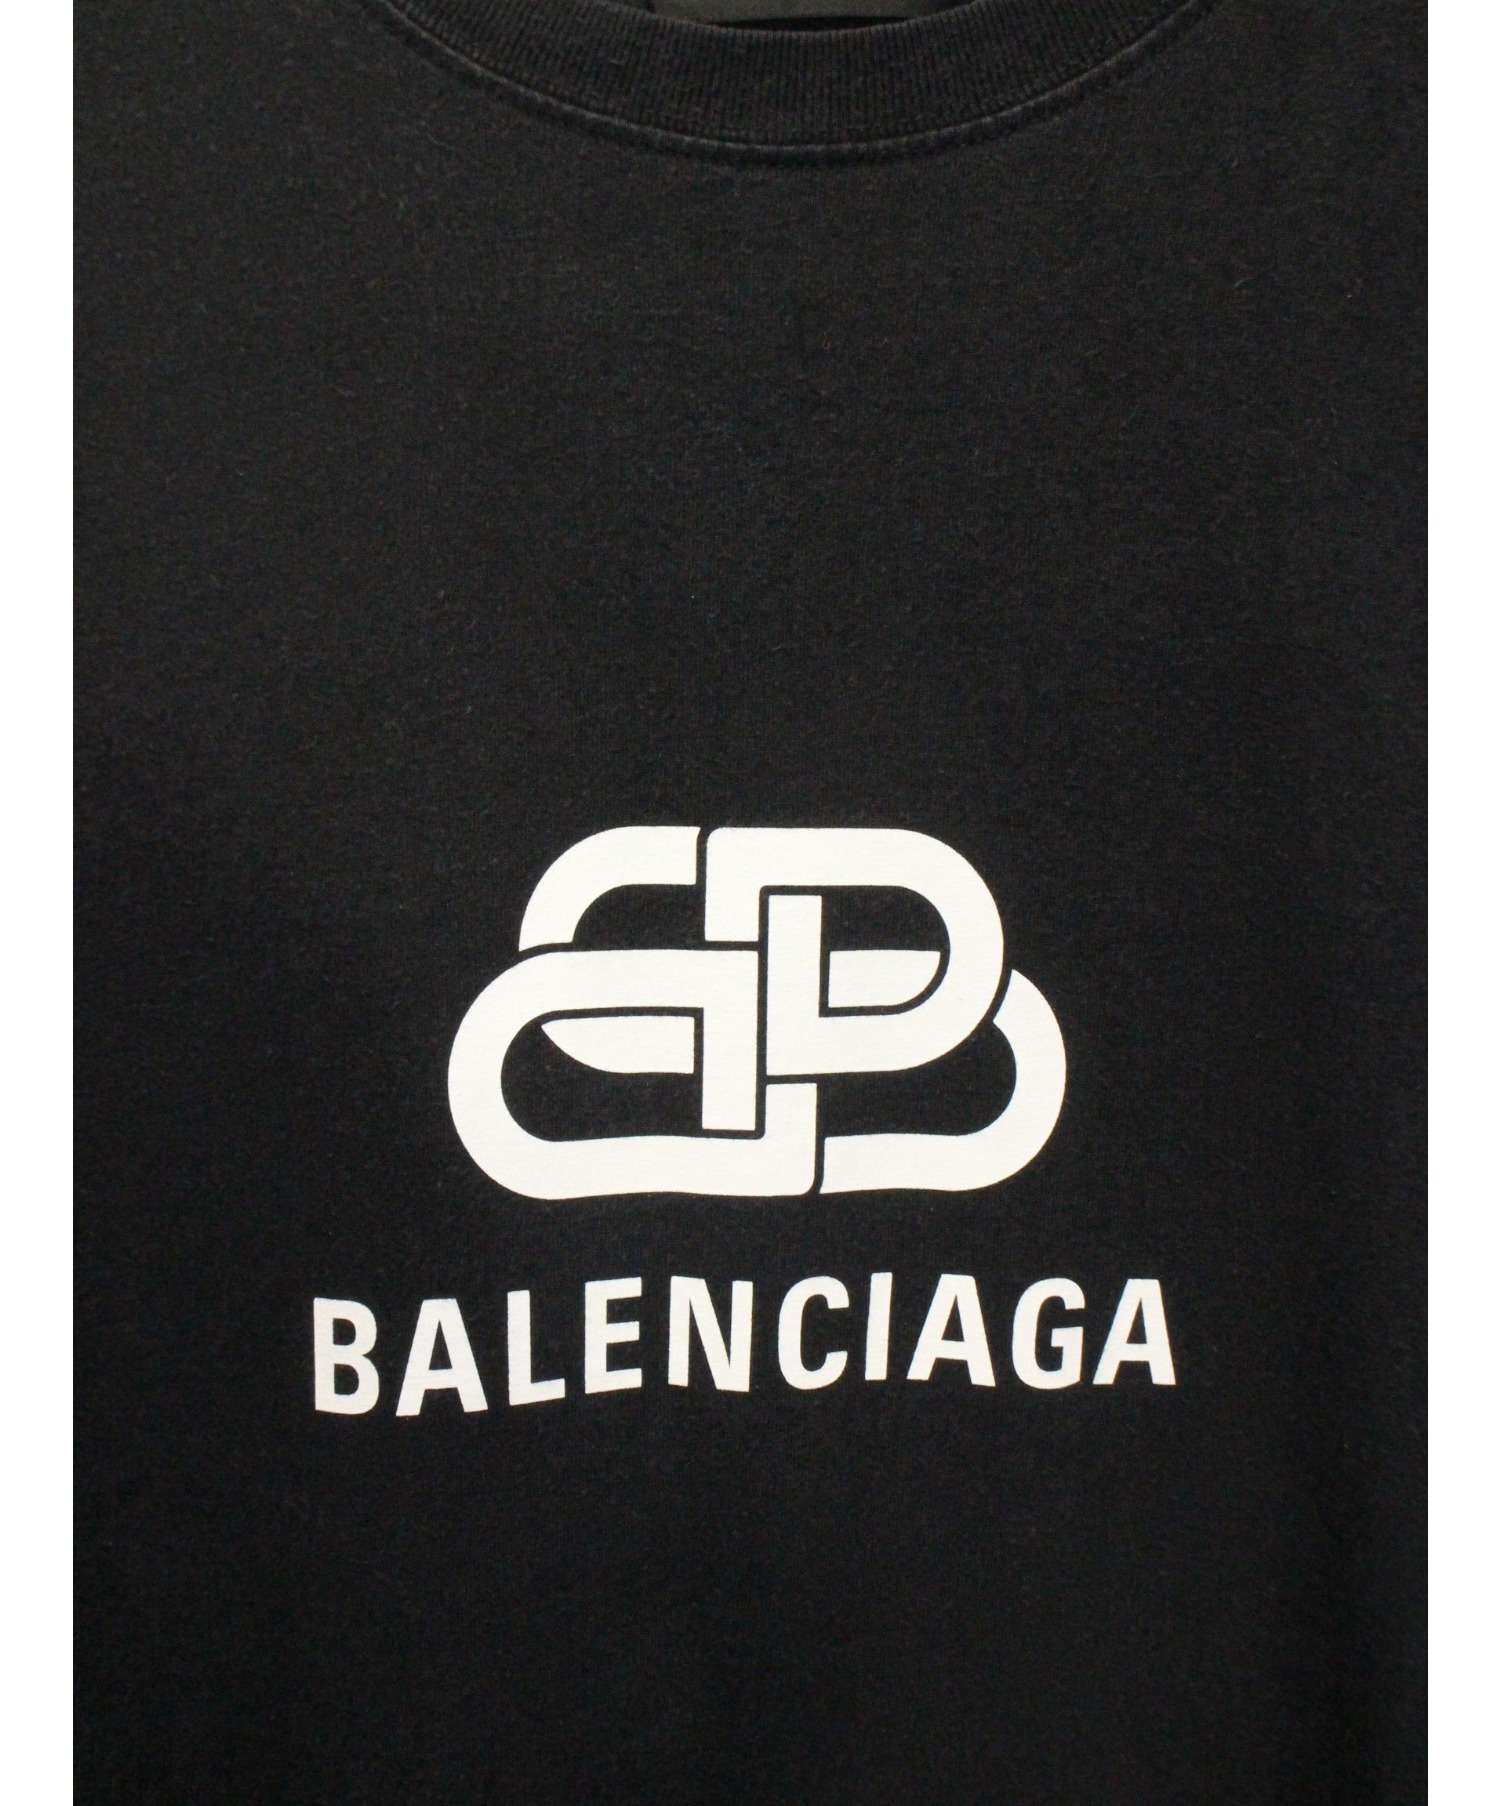 BALENCIAGA (バレンシアガ) BBロゴプリントTシャツ ブラック サイズ:S